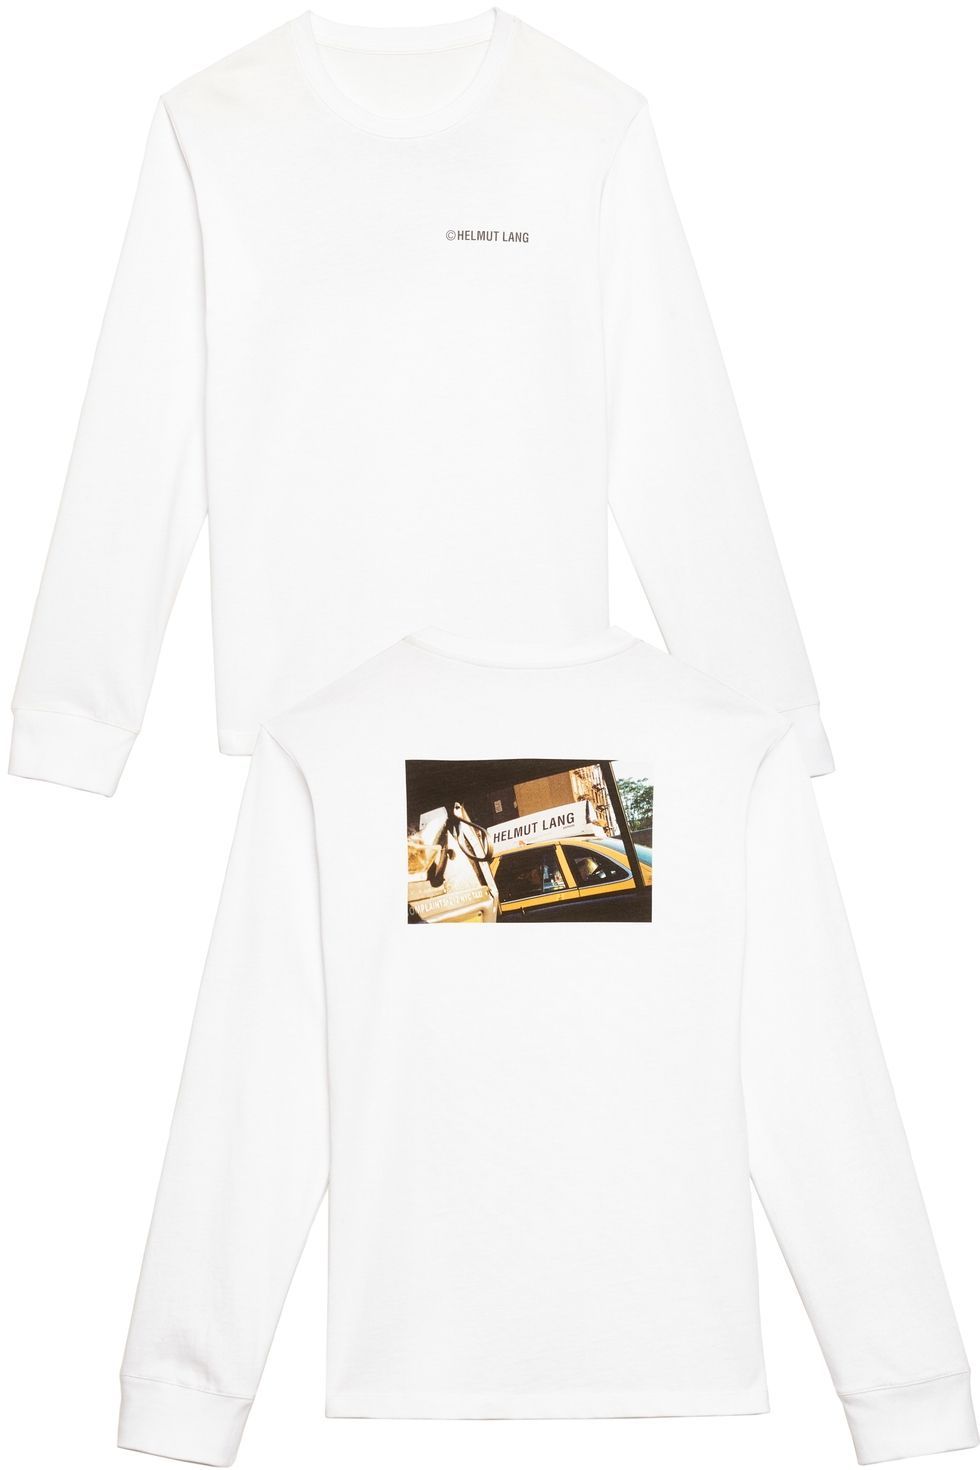 White, Clothing, Sleeve, T-shirt, Long-sleeved t-shirt, Font, Top, Shirt, Brand, 